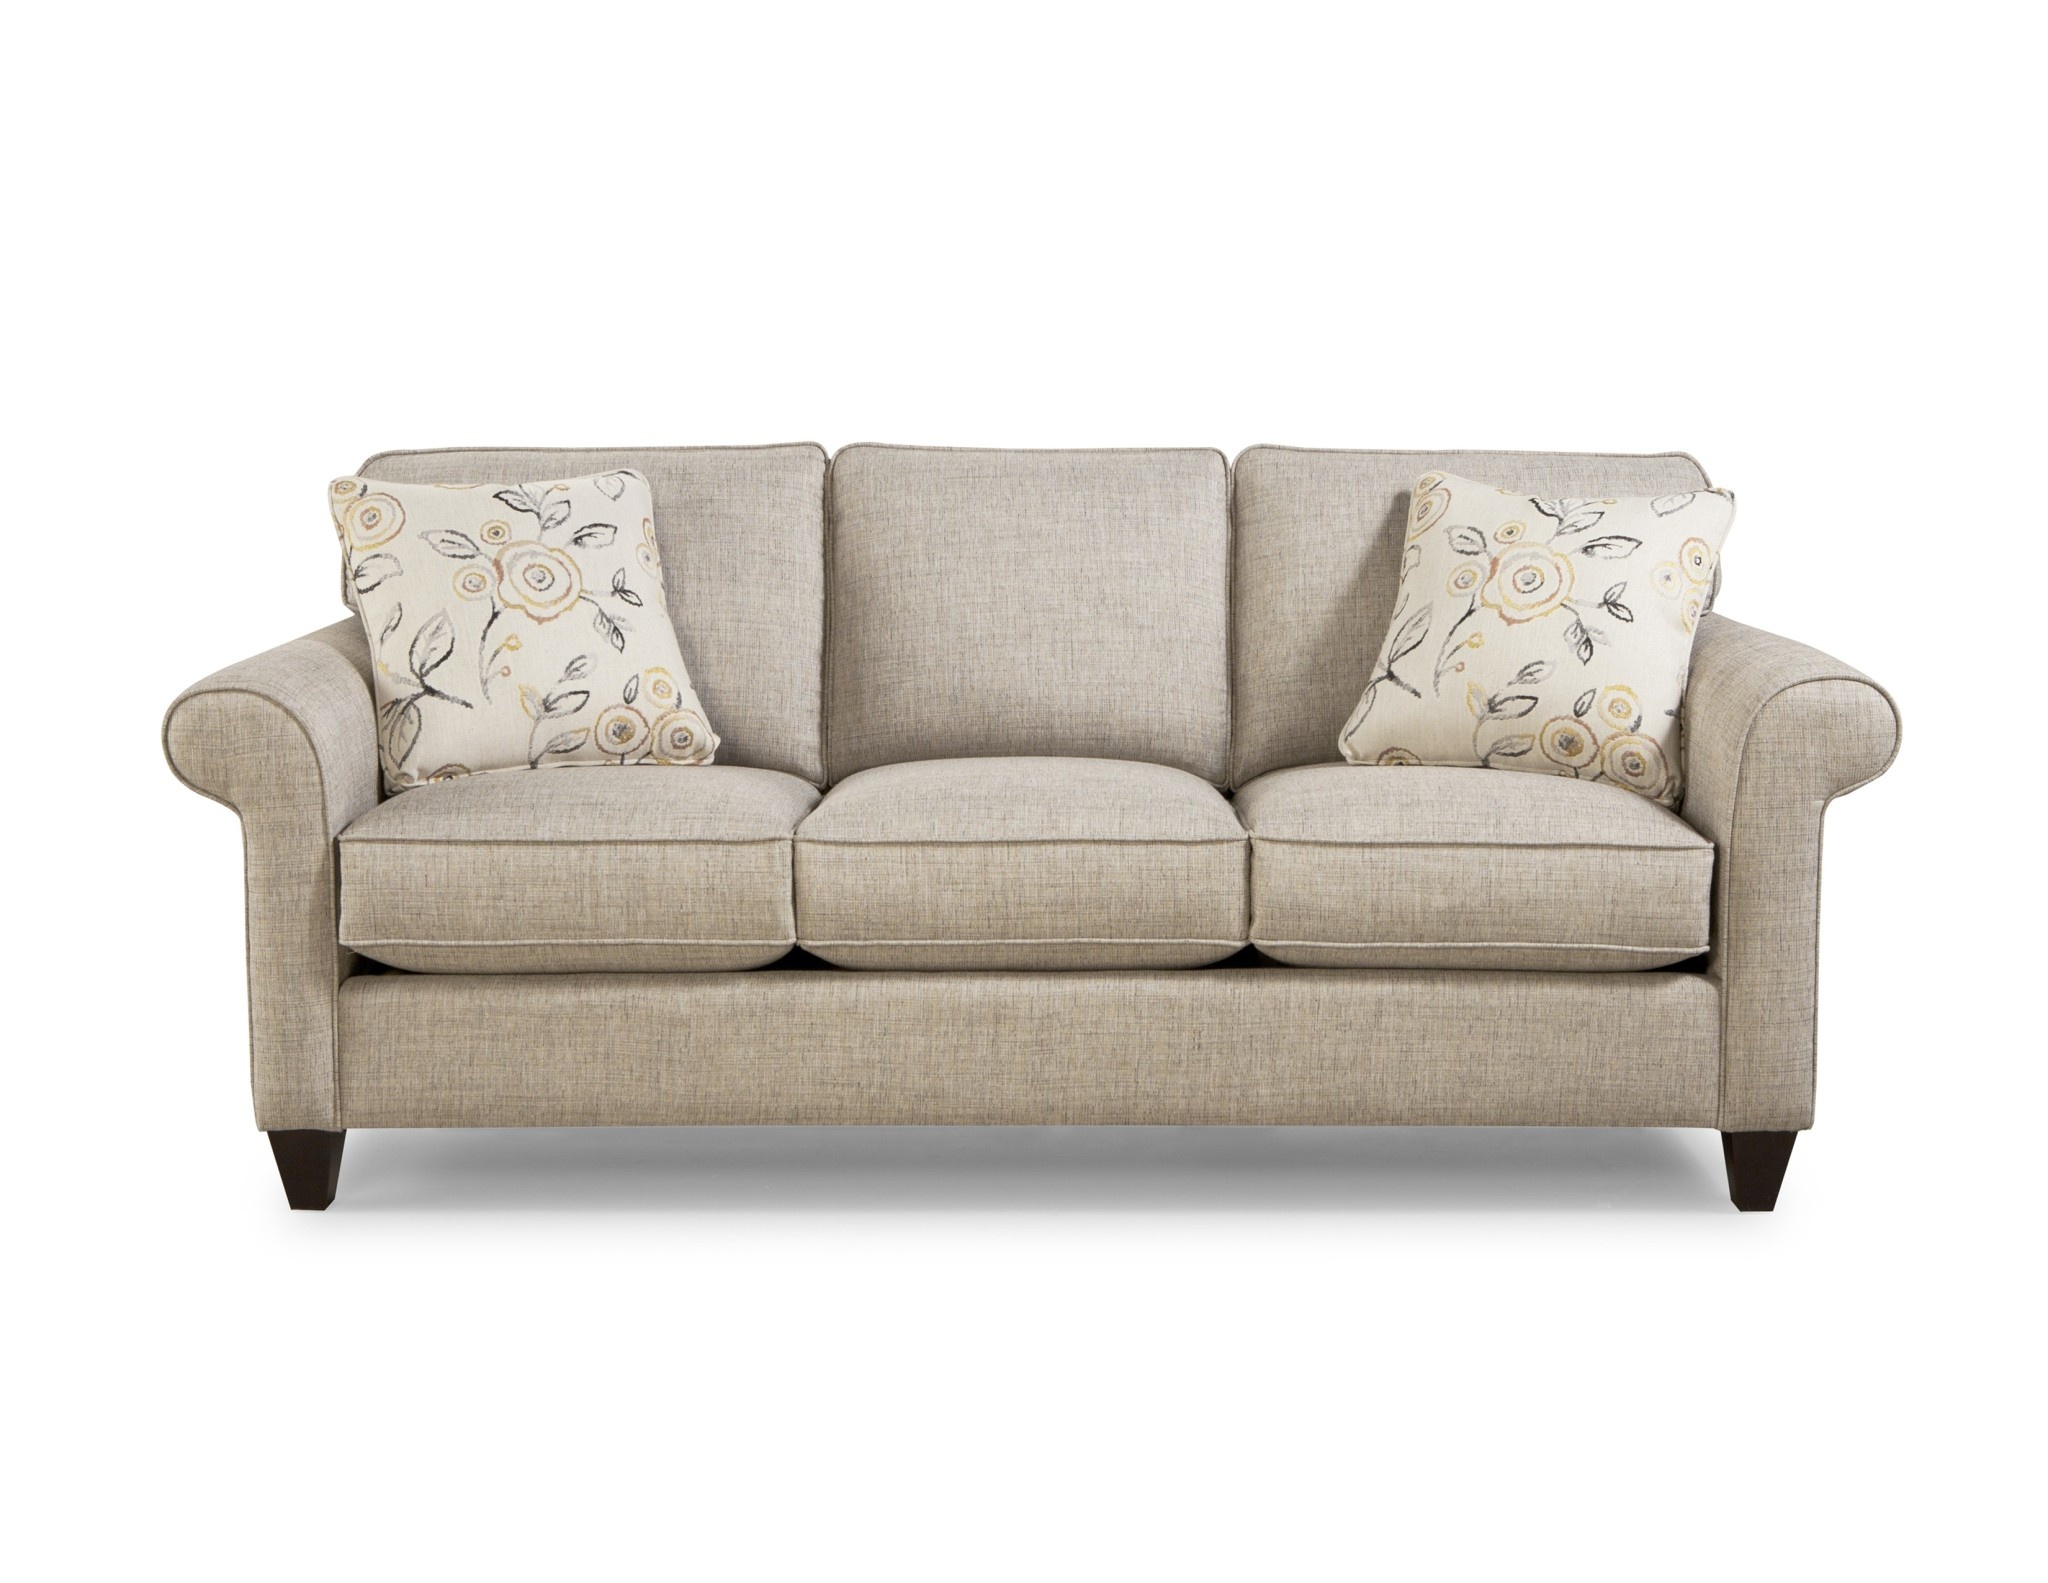 Craftmaster Furniture 7421 Sofa